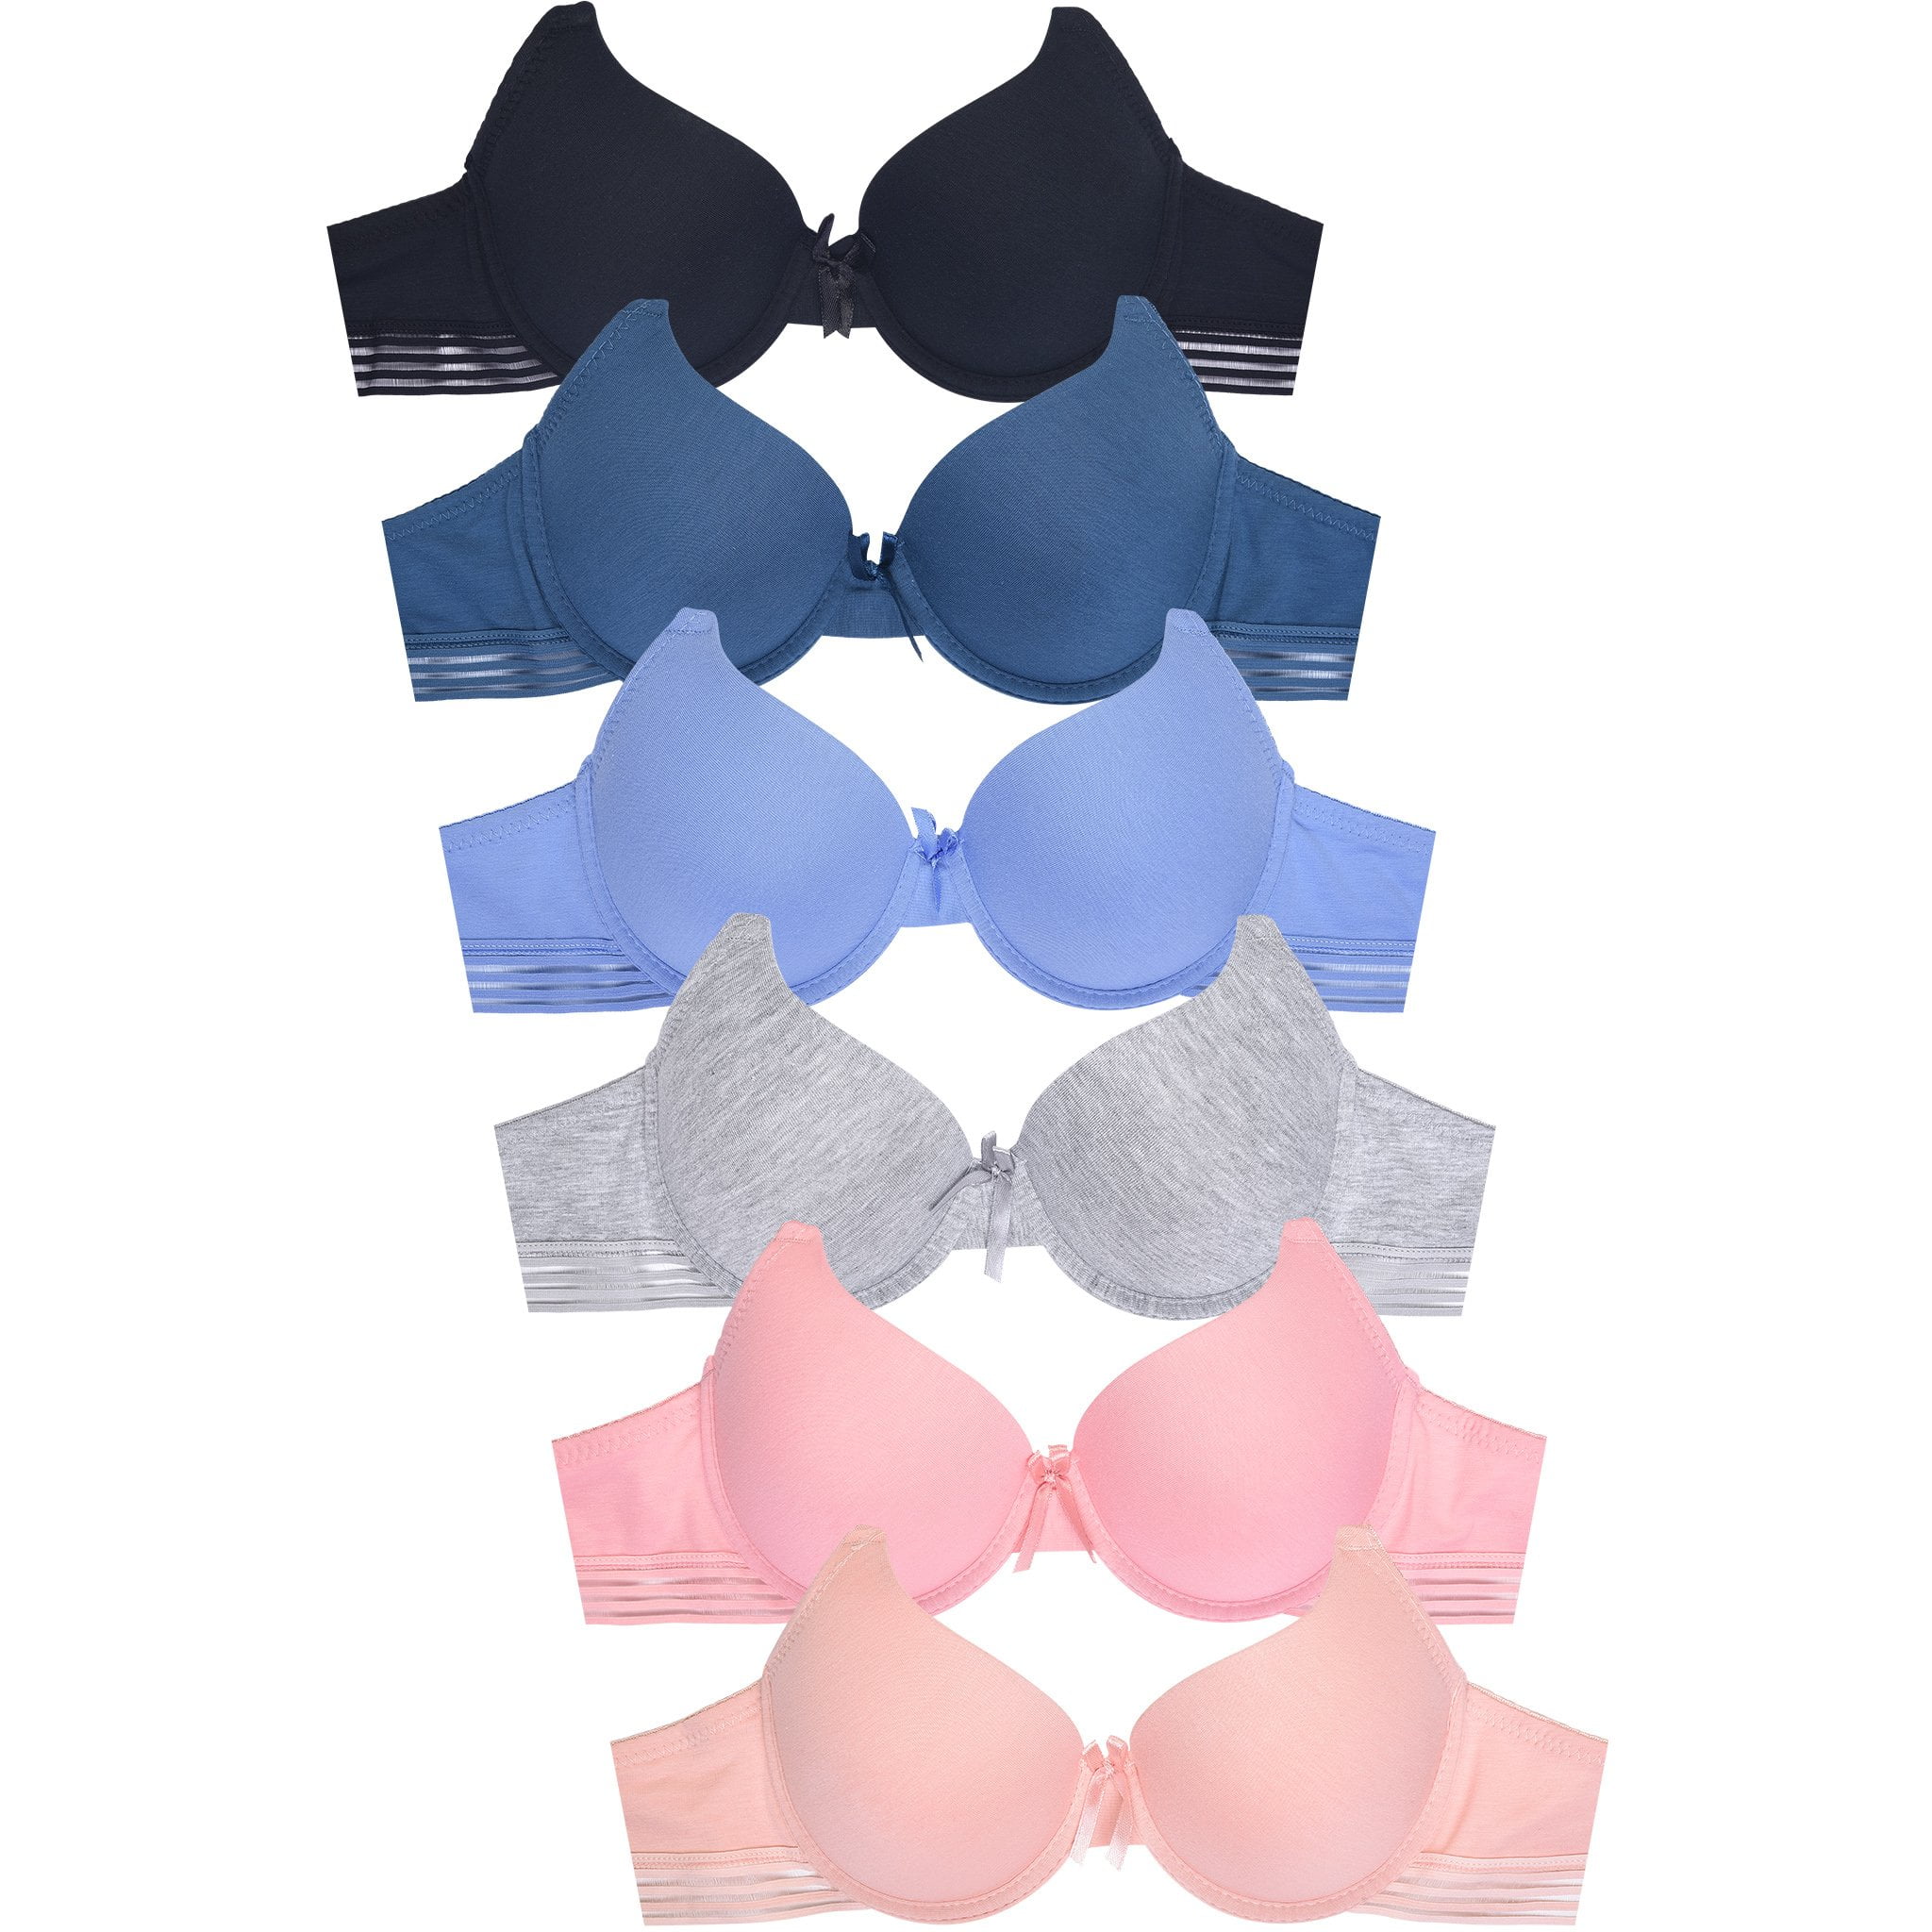 Women's Basic Plain Lace Bras Petite to Plus Size Pack of 6